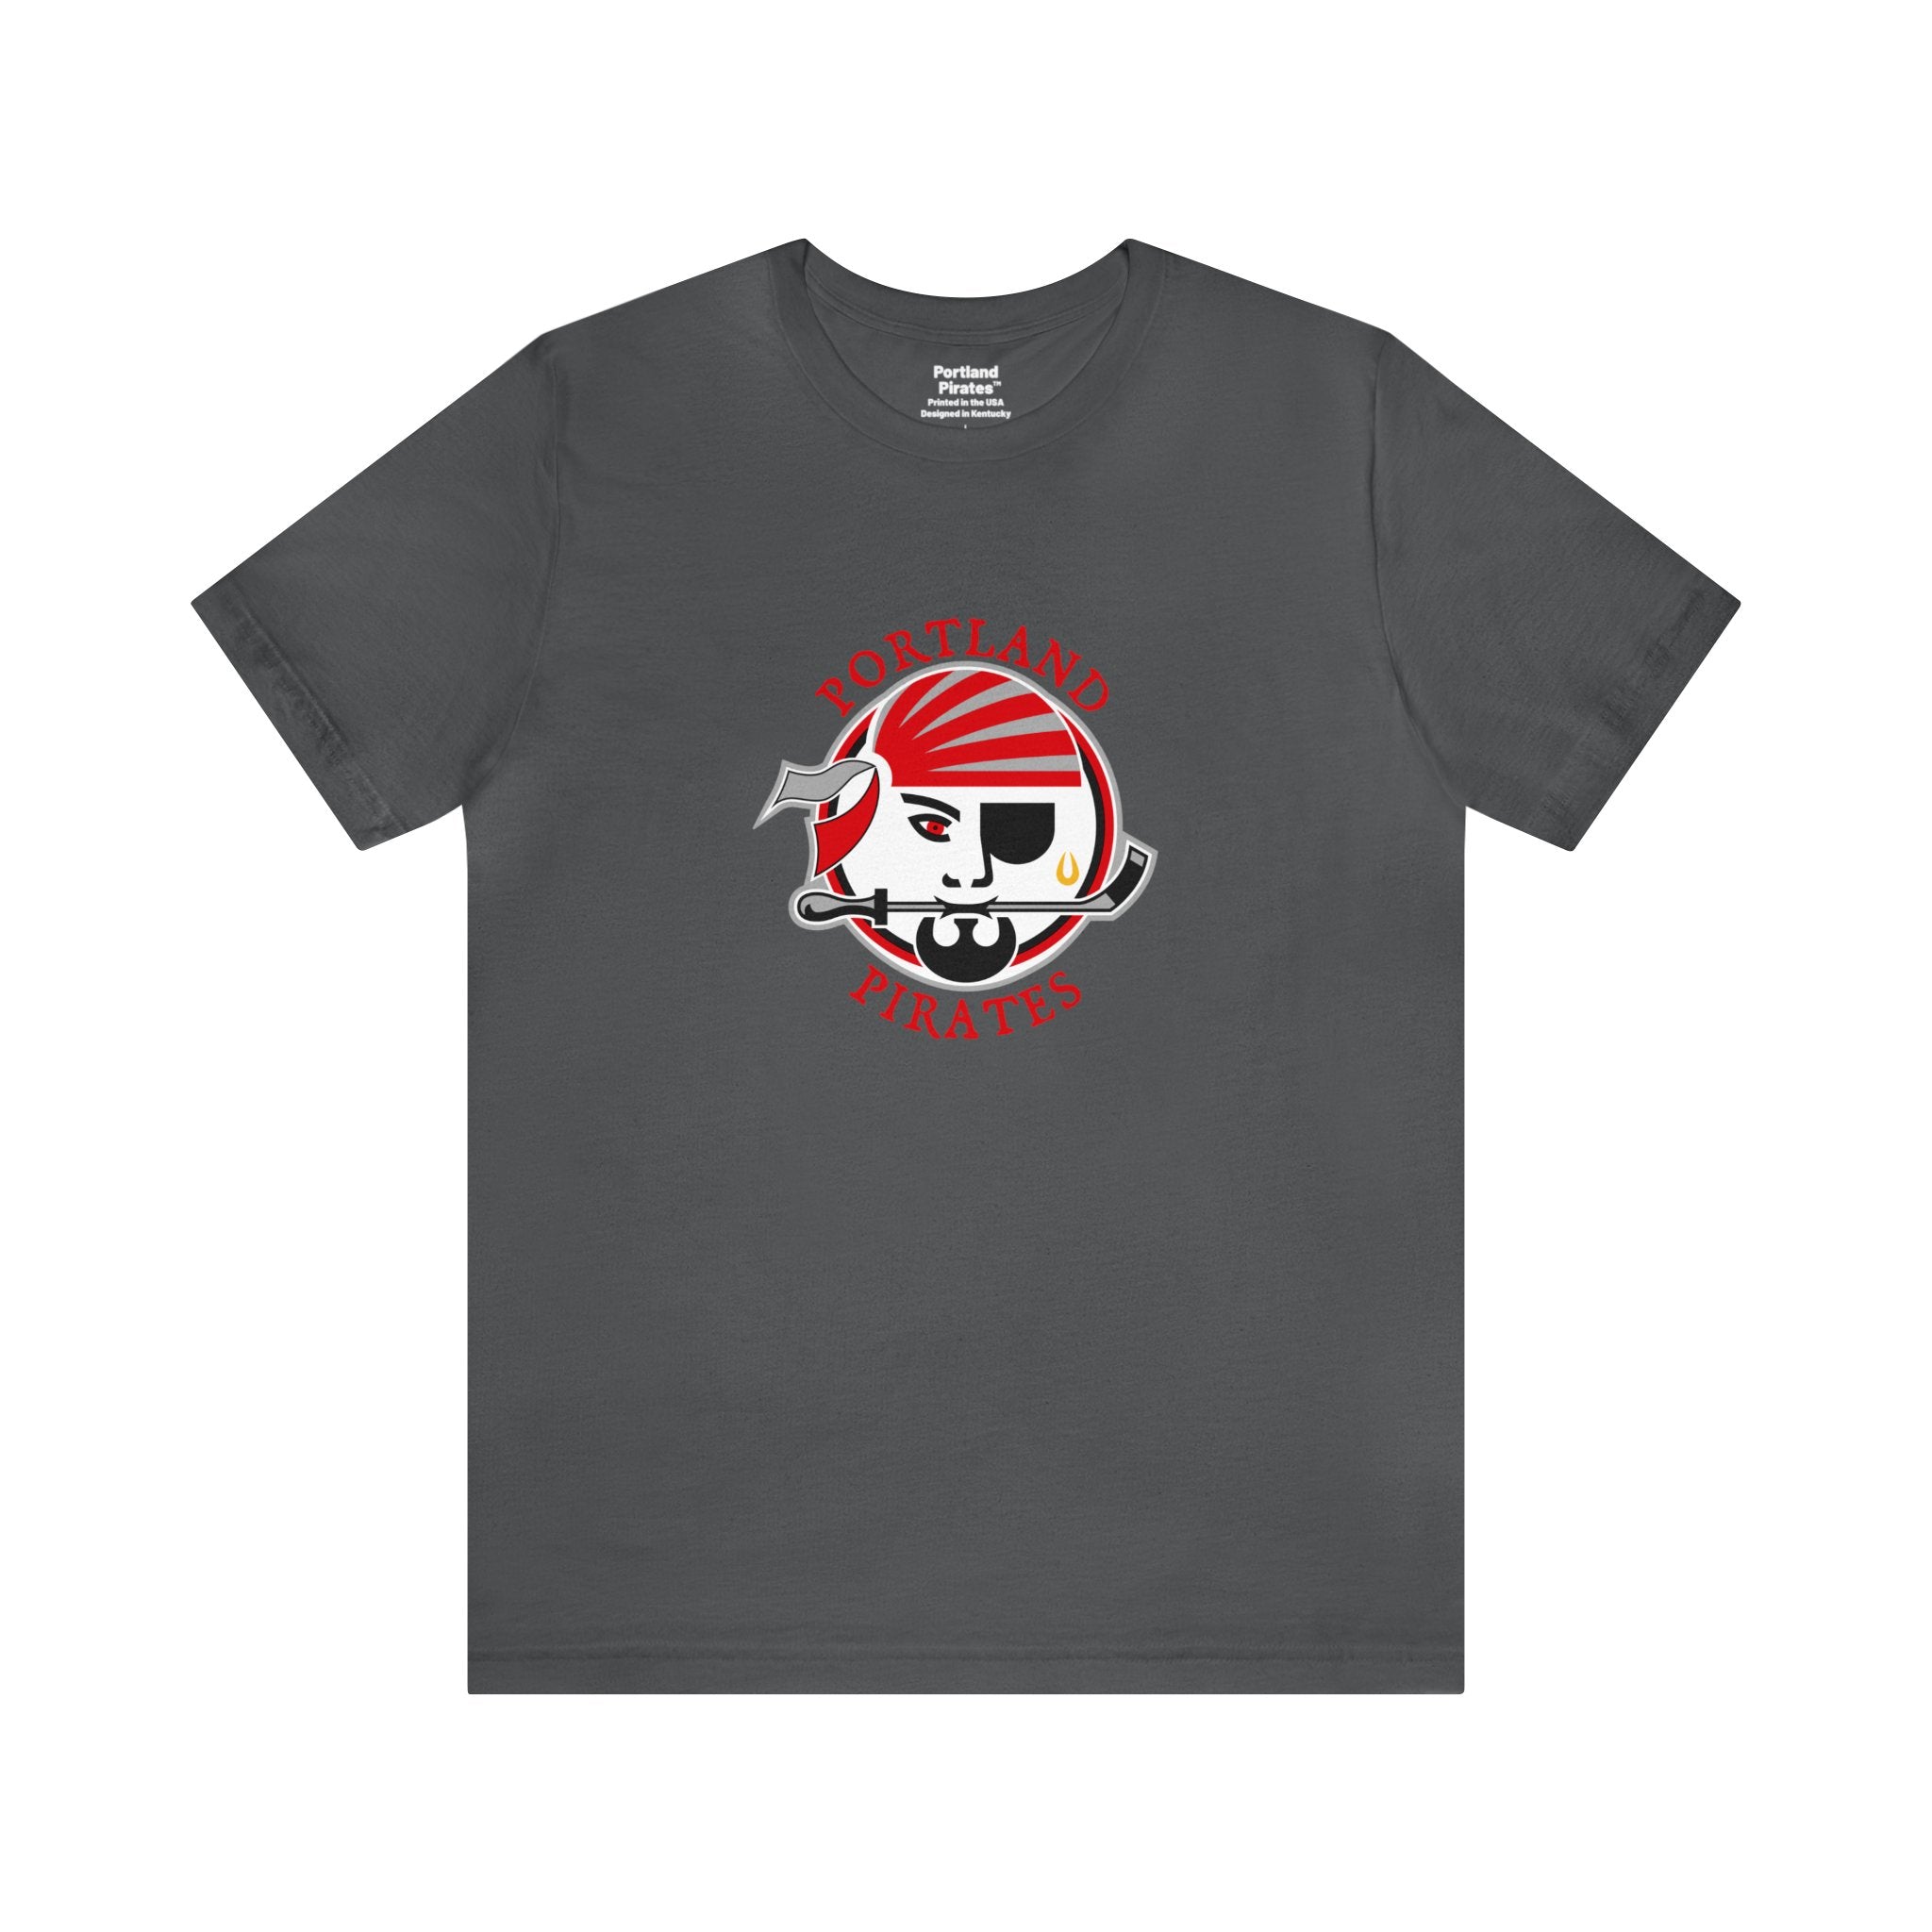 Portland Pirates™ 1990s T-Shirt (Premium Lightweight)